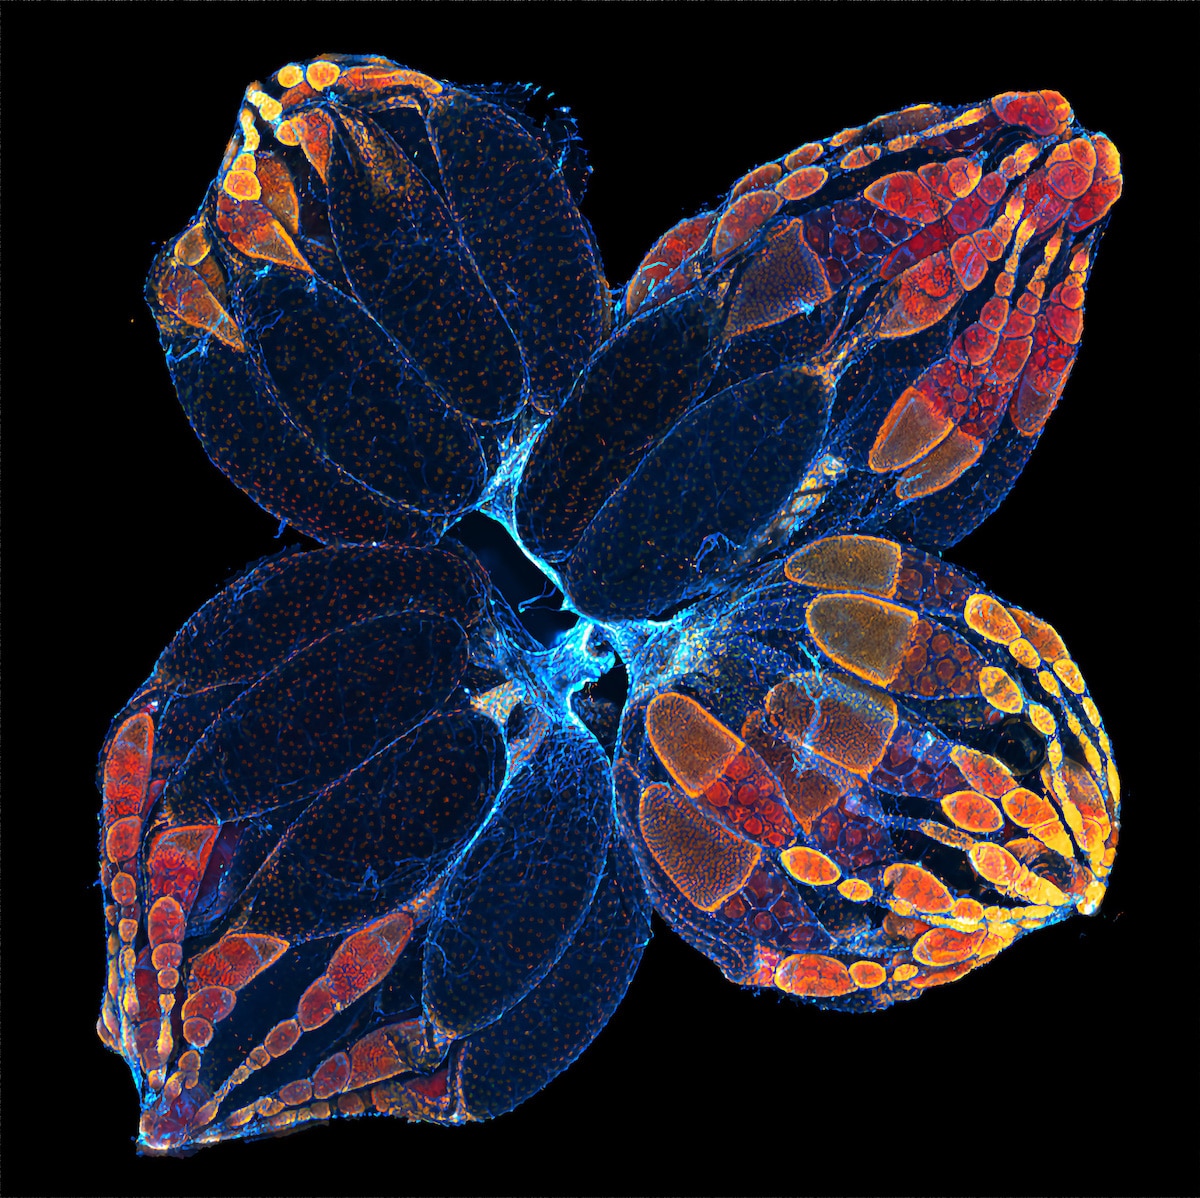 Microscopy of fruit fly ovaries